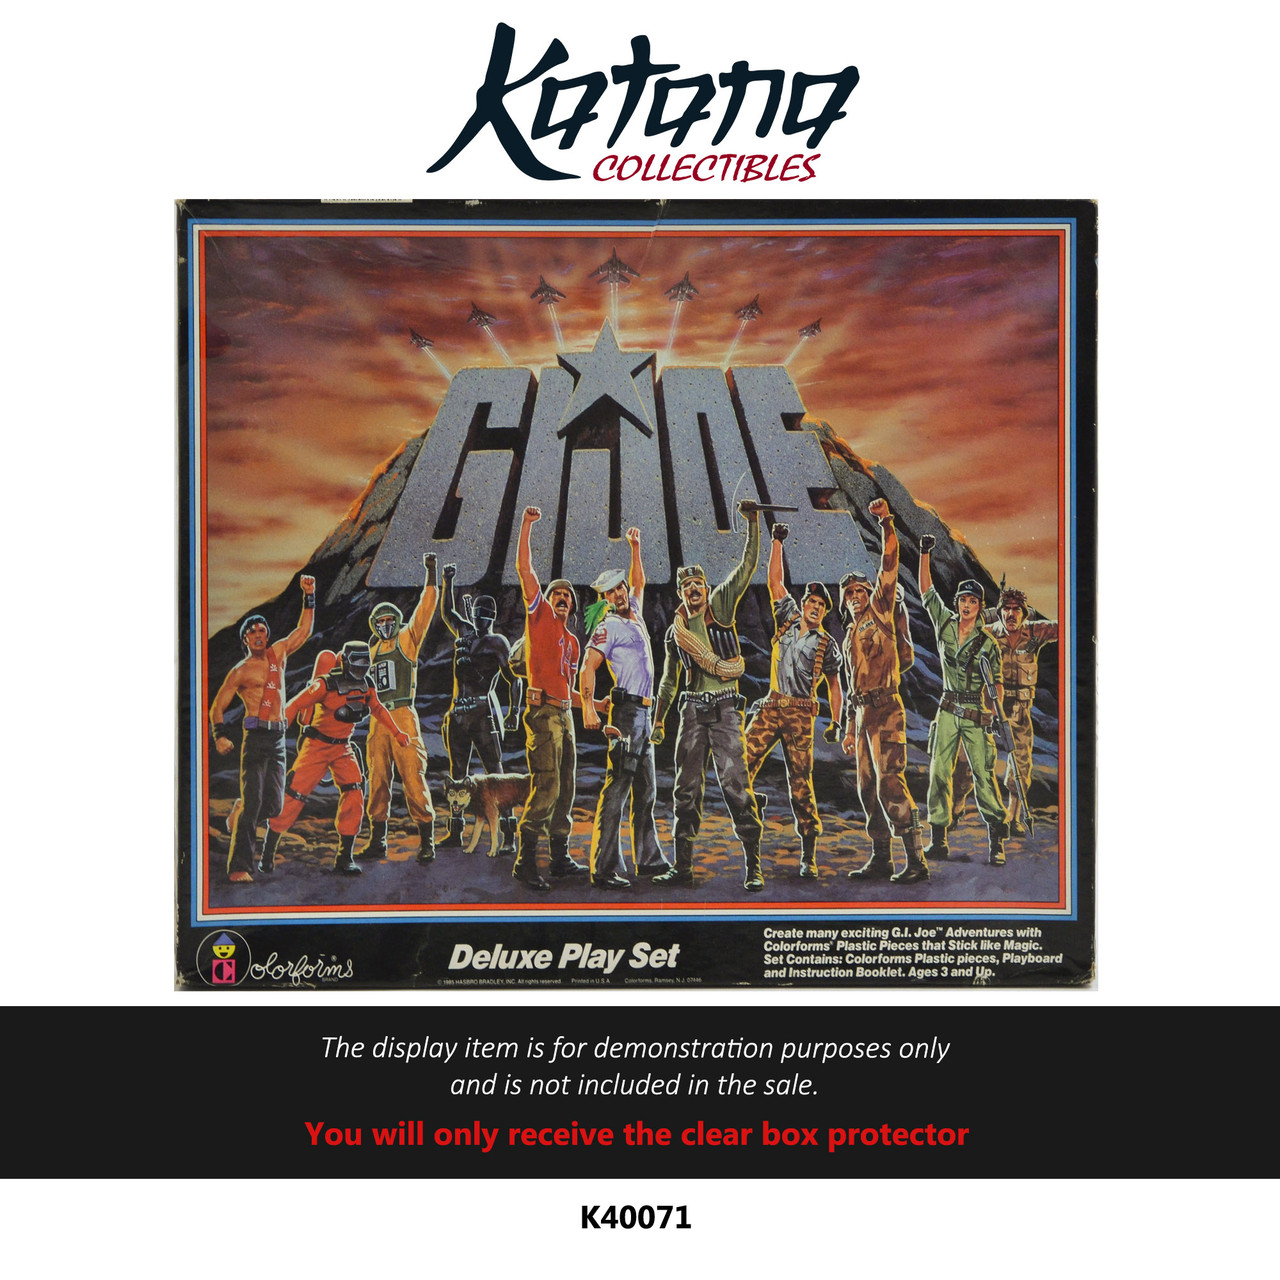 Katana Collectibles Protector For 1985 G.I. Joe Colorforms Deluxe Play Set